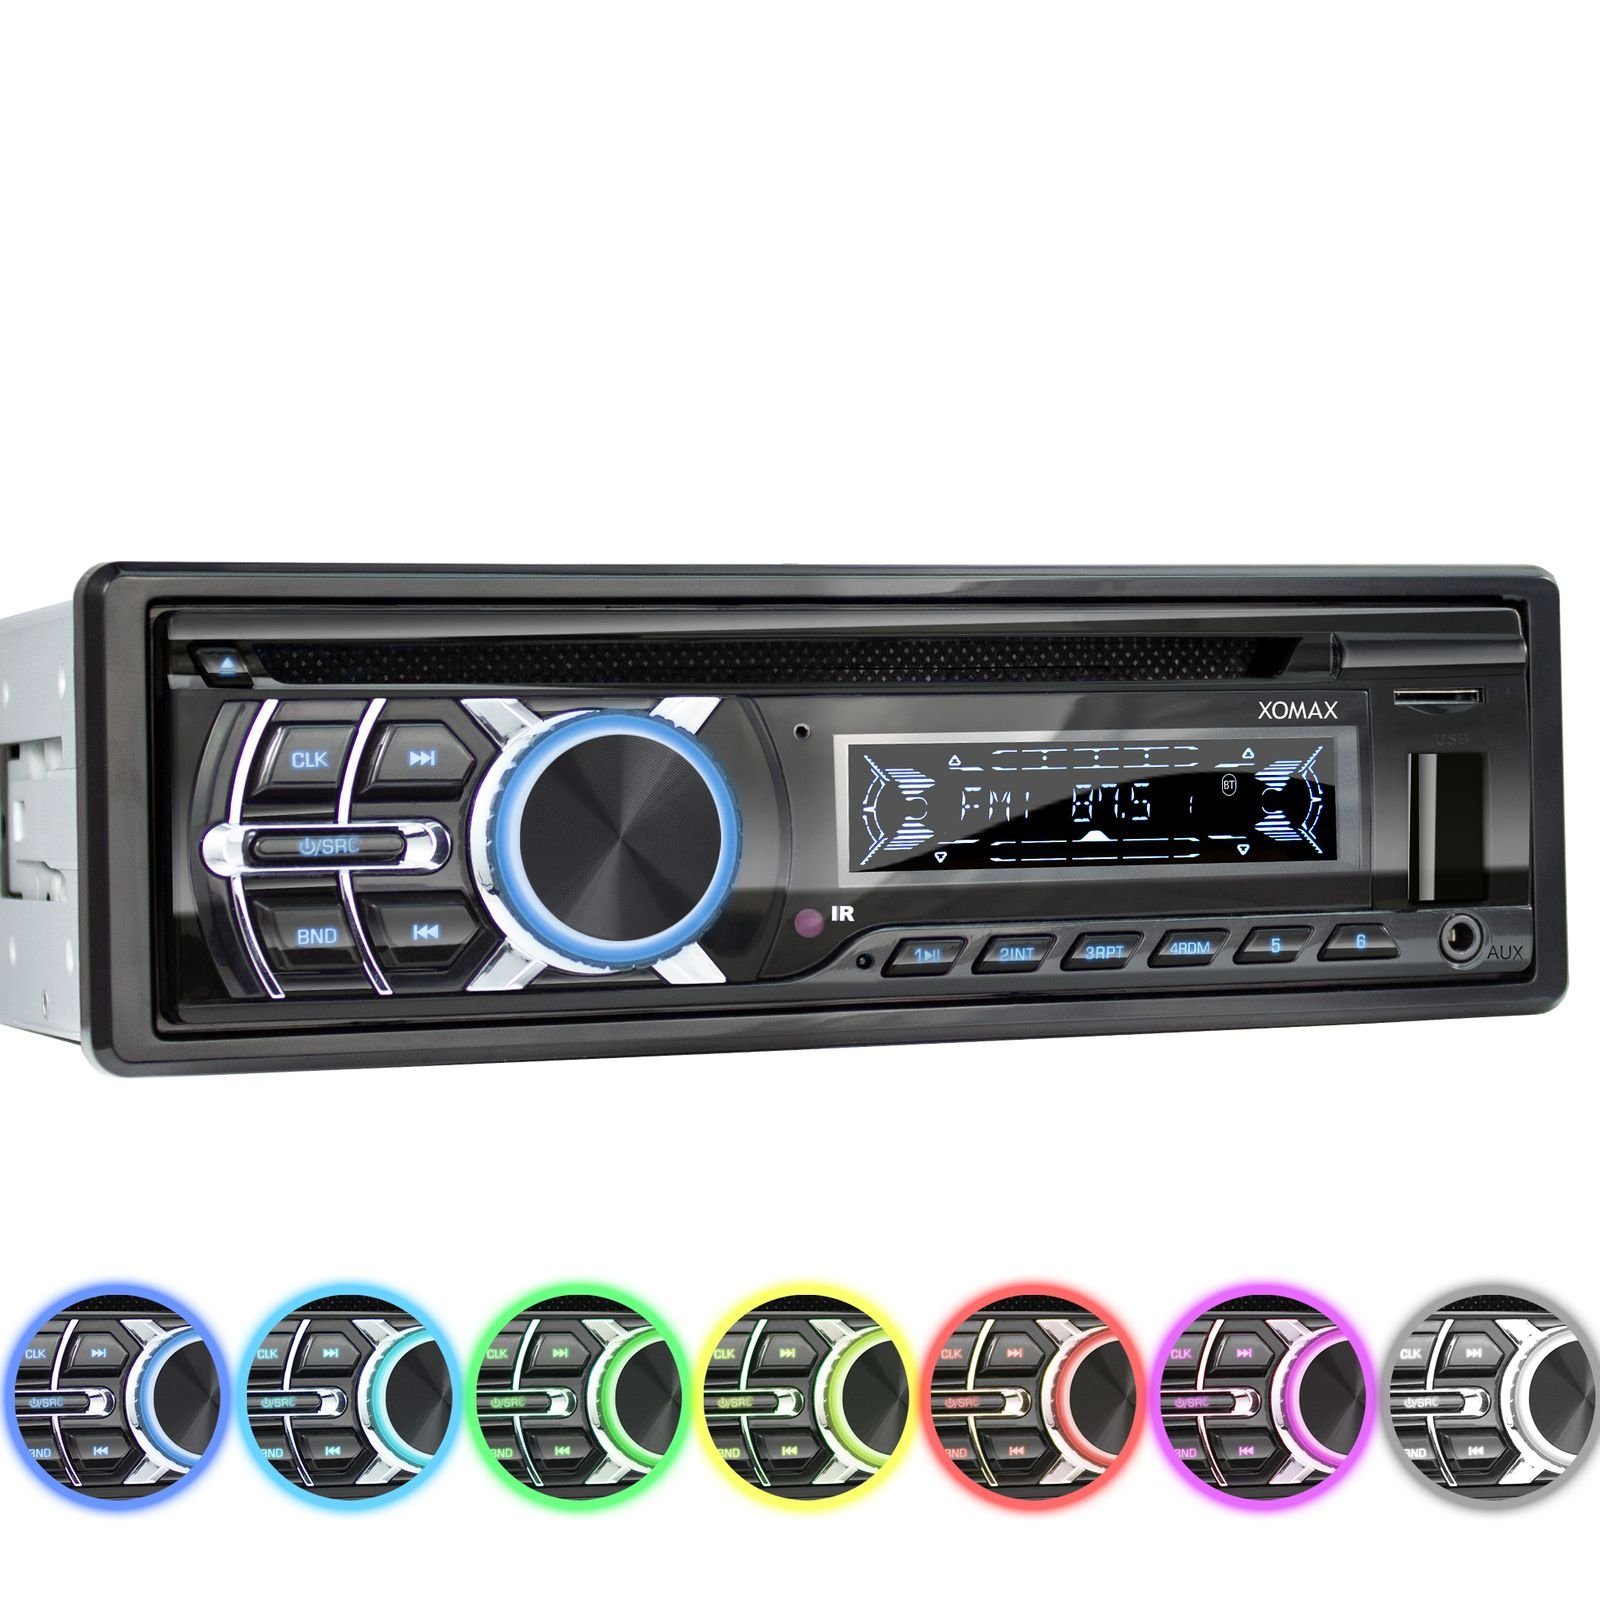 XOMAX XM-CDB624 Autoradio mit CD Player, Bluetooth, USB, SD, AUX IN, 1 DIN  Autoradio